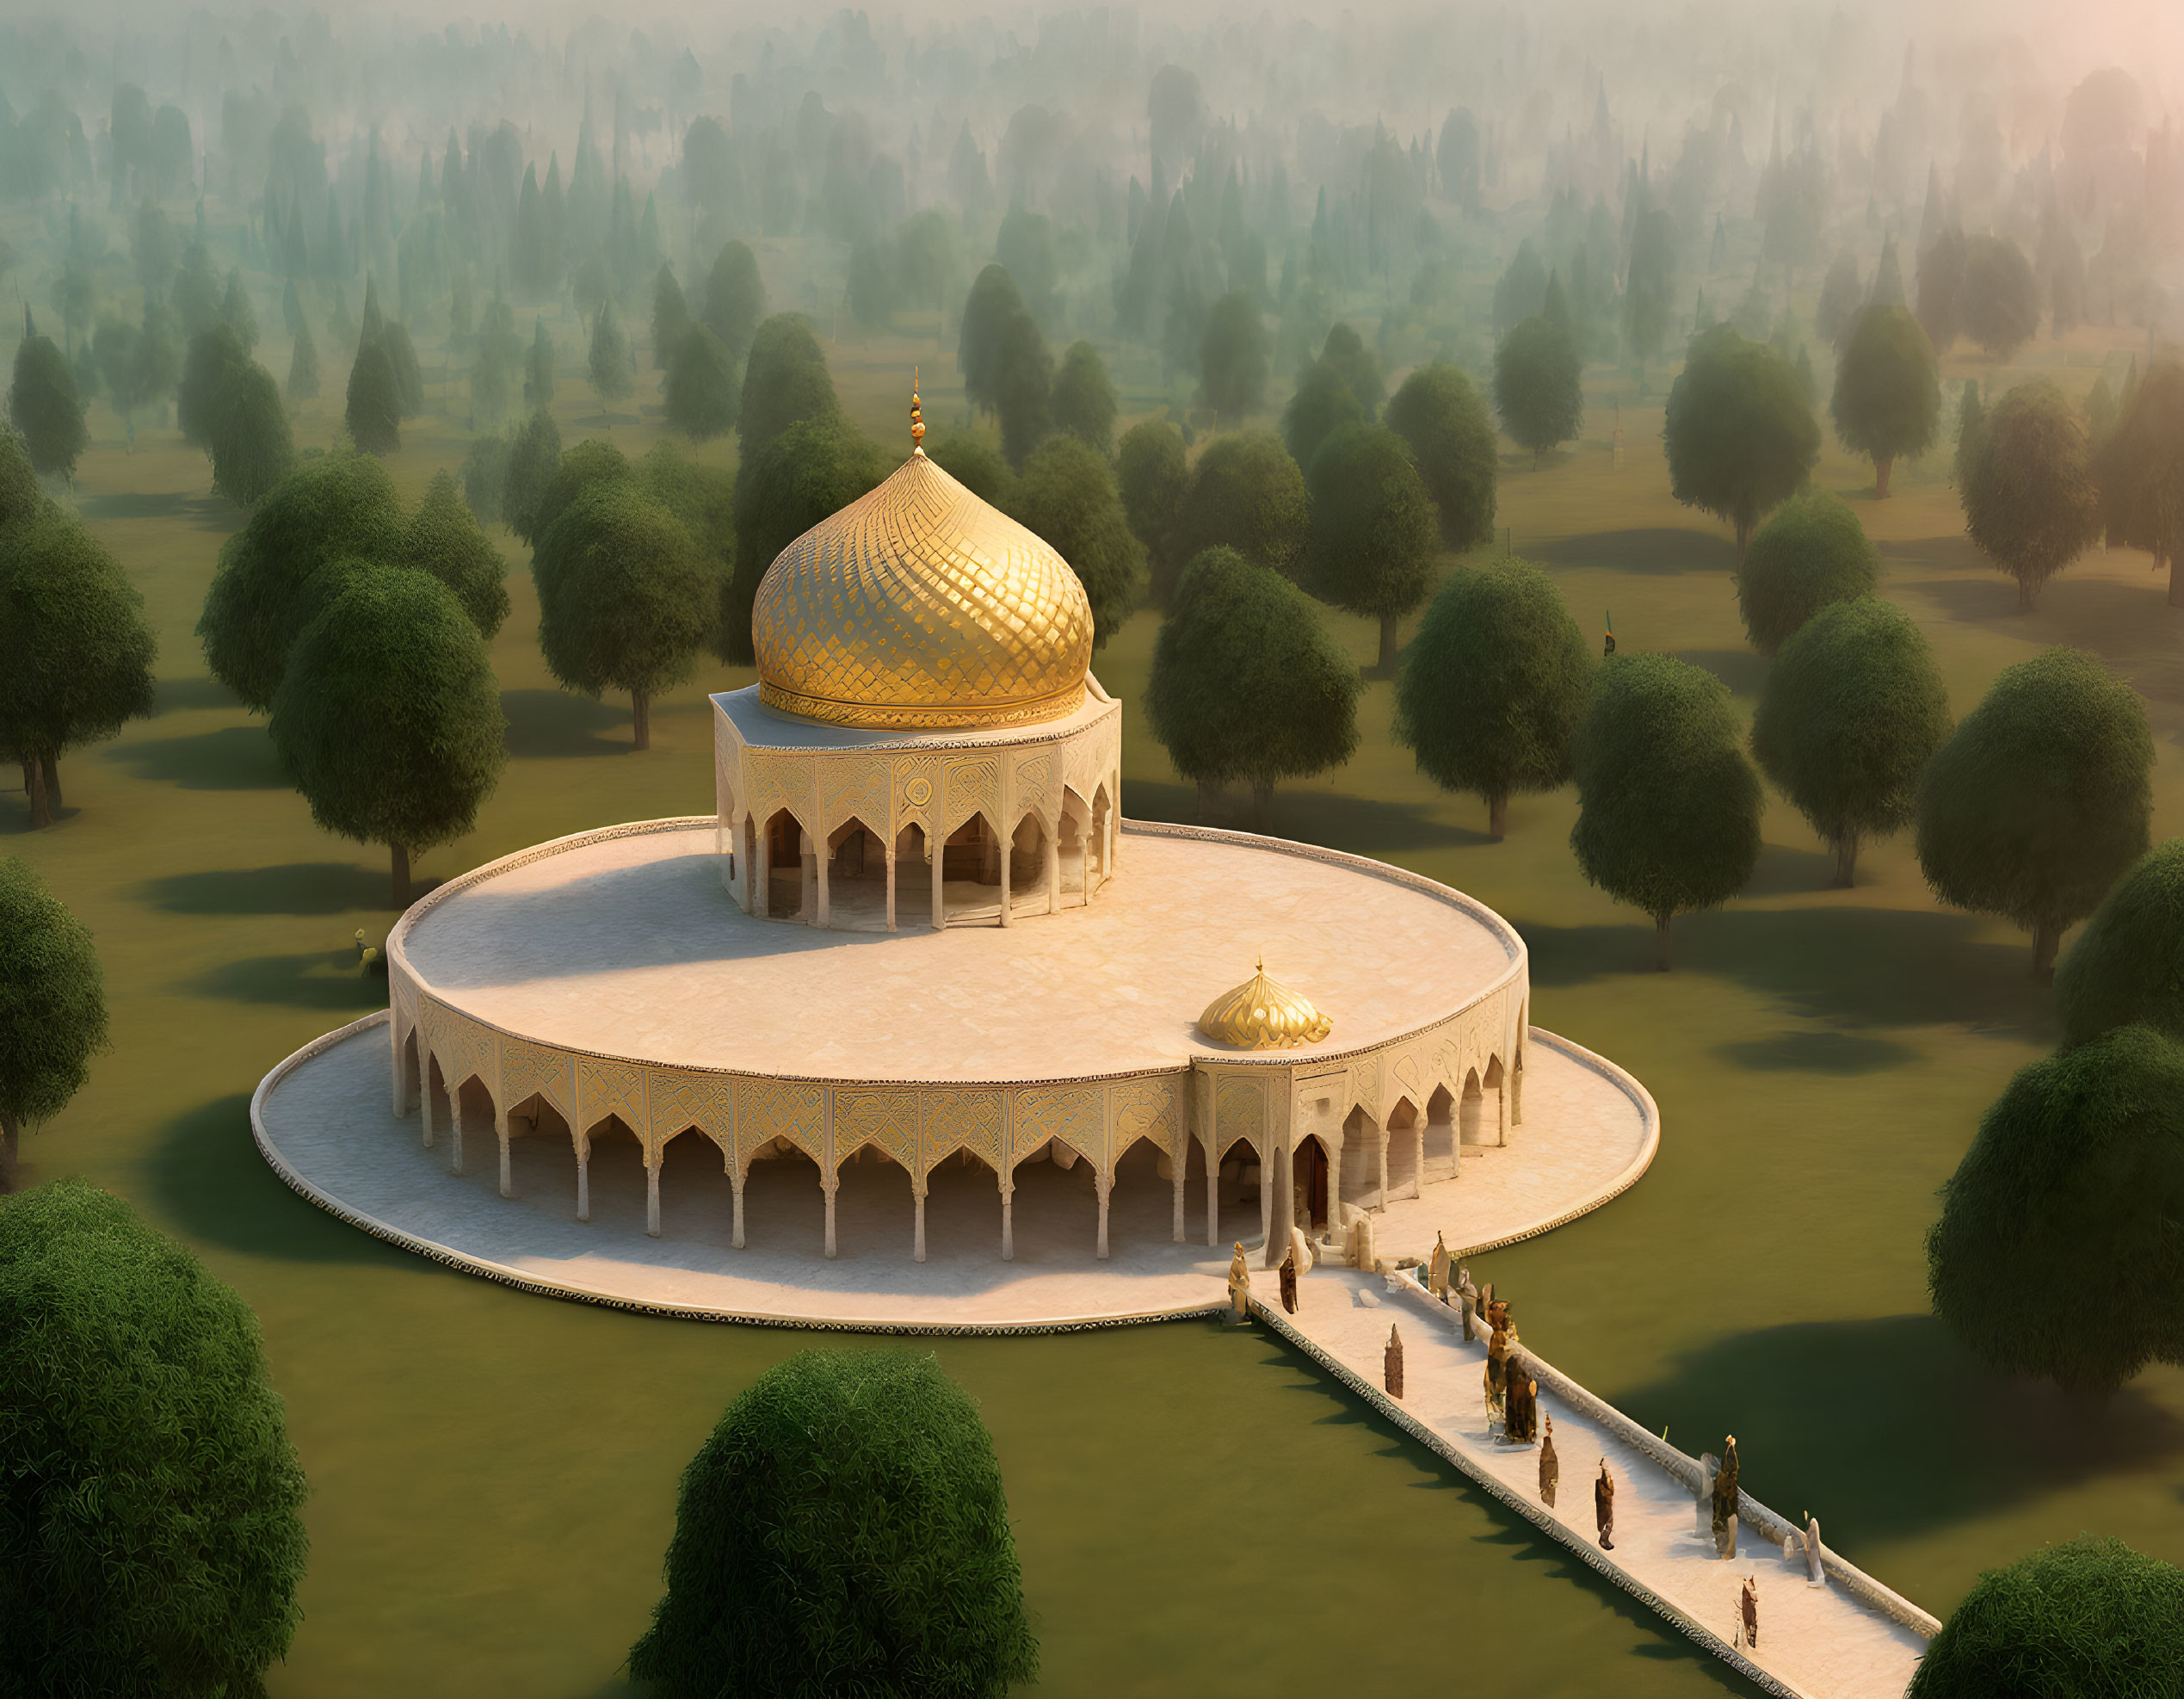 Golden-domed mausoleum in serene landscape with pathway at dusk